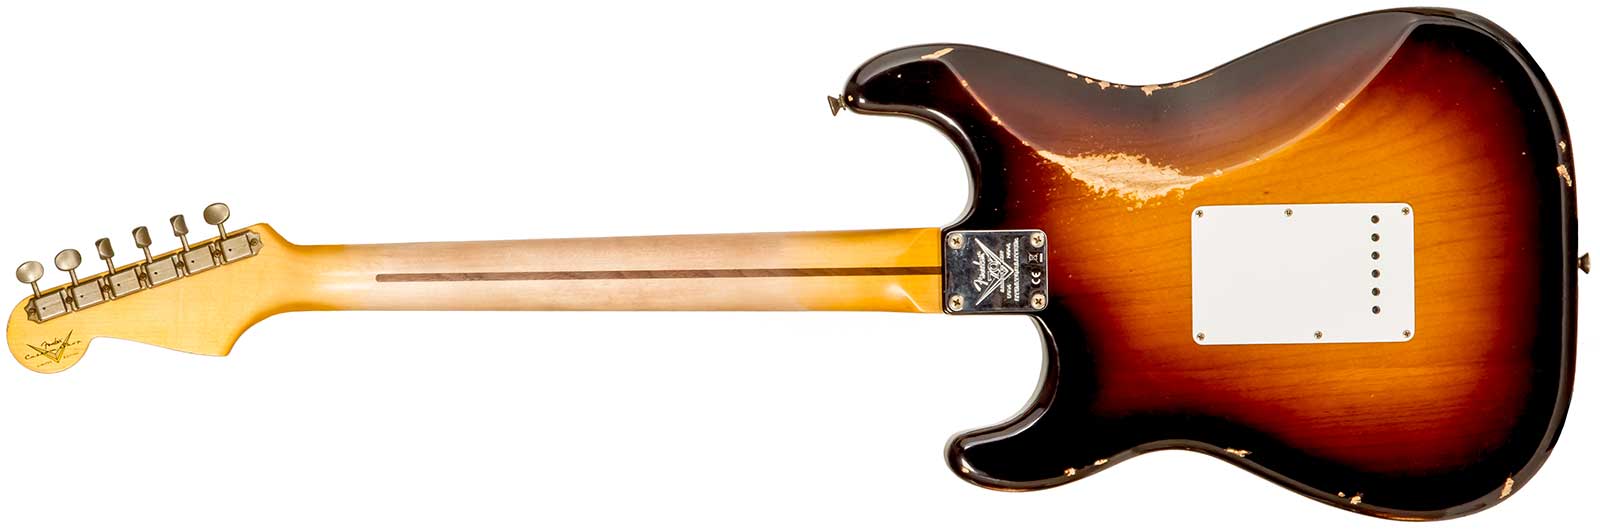 Fender Custom Shop Strat 1954 70th Anniv. 3s Trem Mn #xn4158 - Relic Wide-fade 2-color Sunburst - Guitarra eléctrica con forma de str. - Variation 1